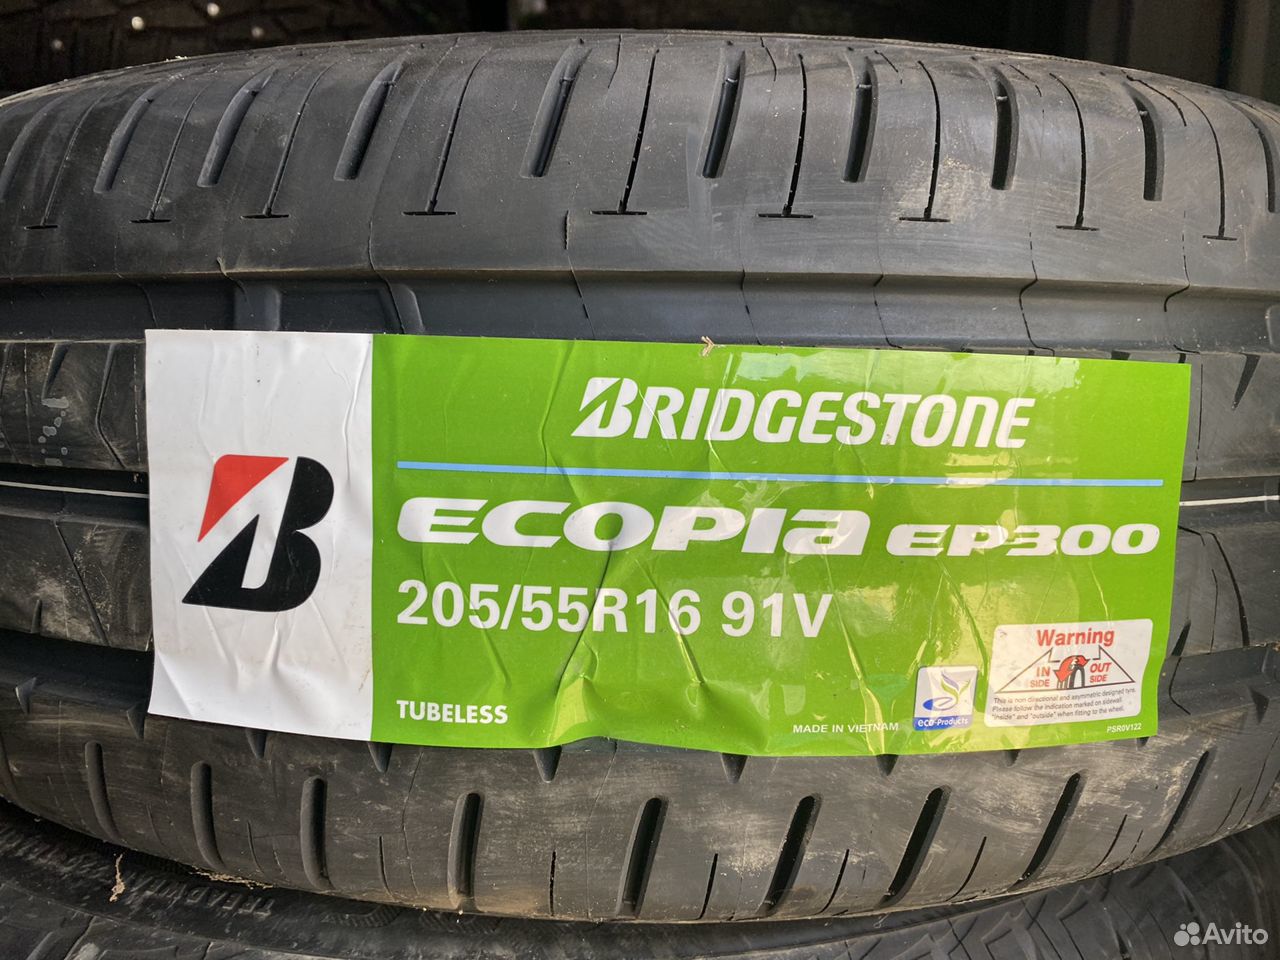 Bridgestone Ecopia ep300 205/55 r16 91v. Bridgestone 215/60r16 95v Ecopia ep300. Bridgestone Ecopia ep300 91v 2021. Bridgestone Ecopia ep300 215/60/16.